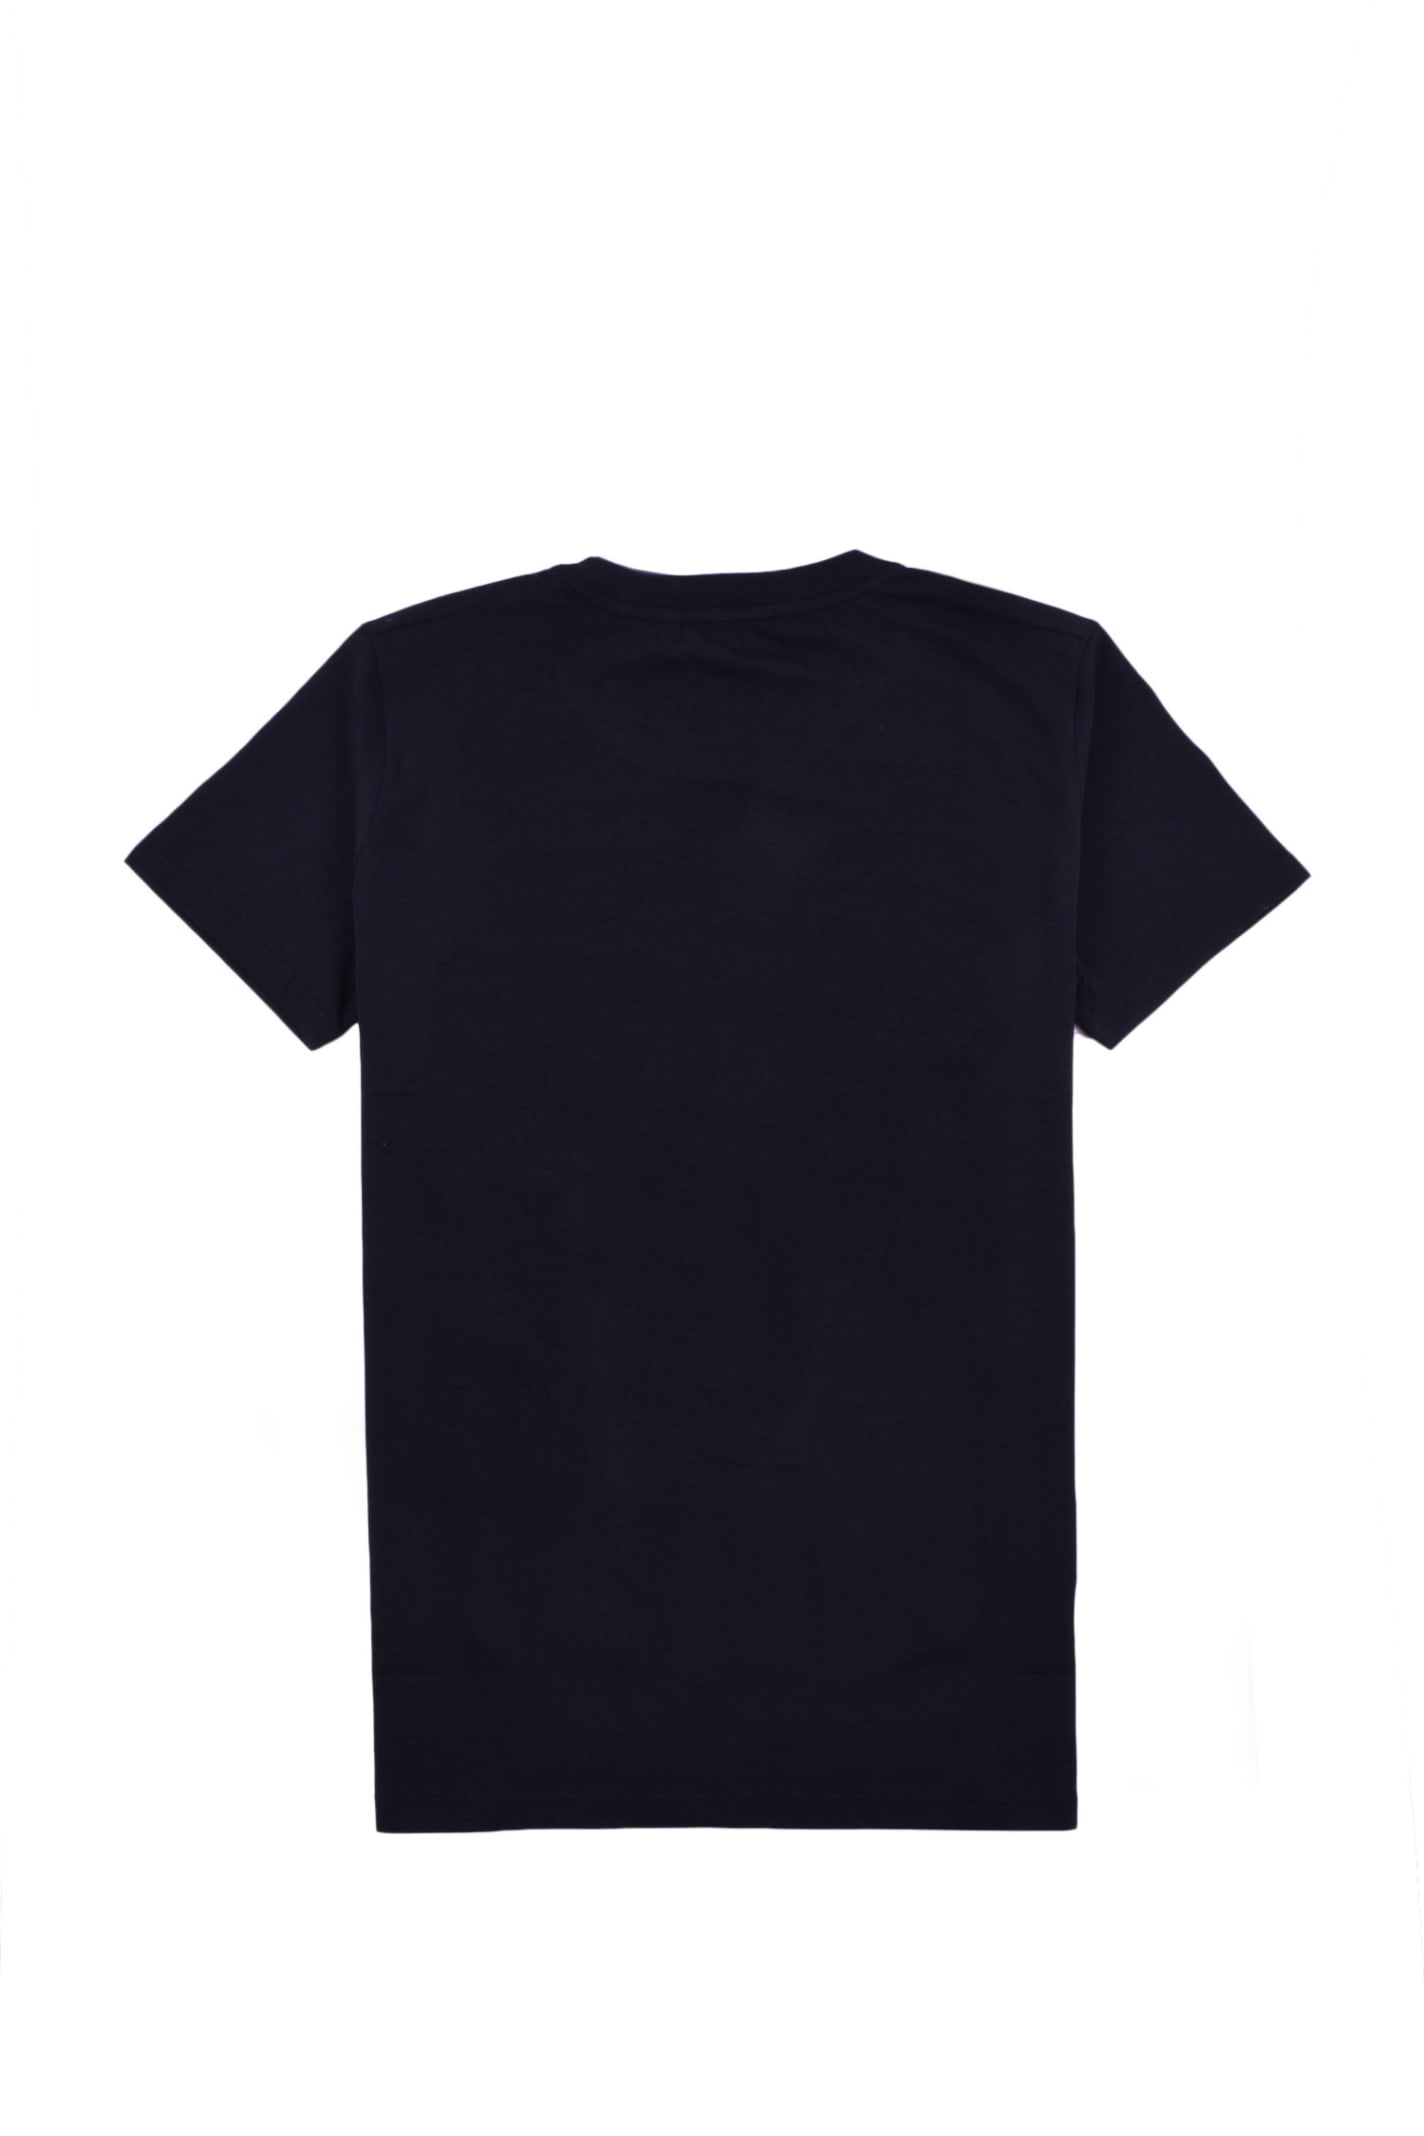 Shop Rrd - Roberto Ricci Design T-shirt In Black